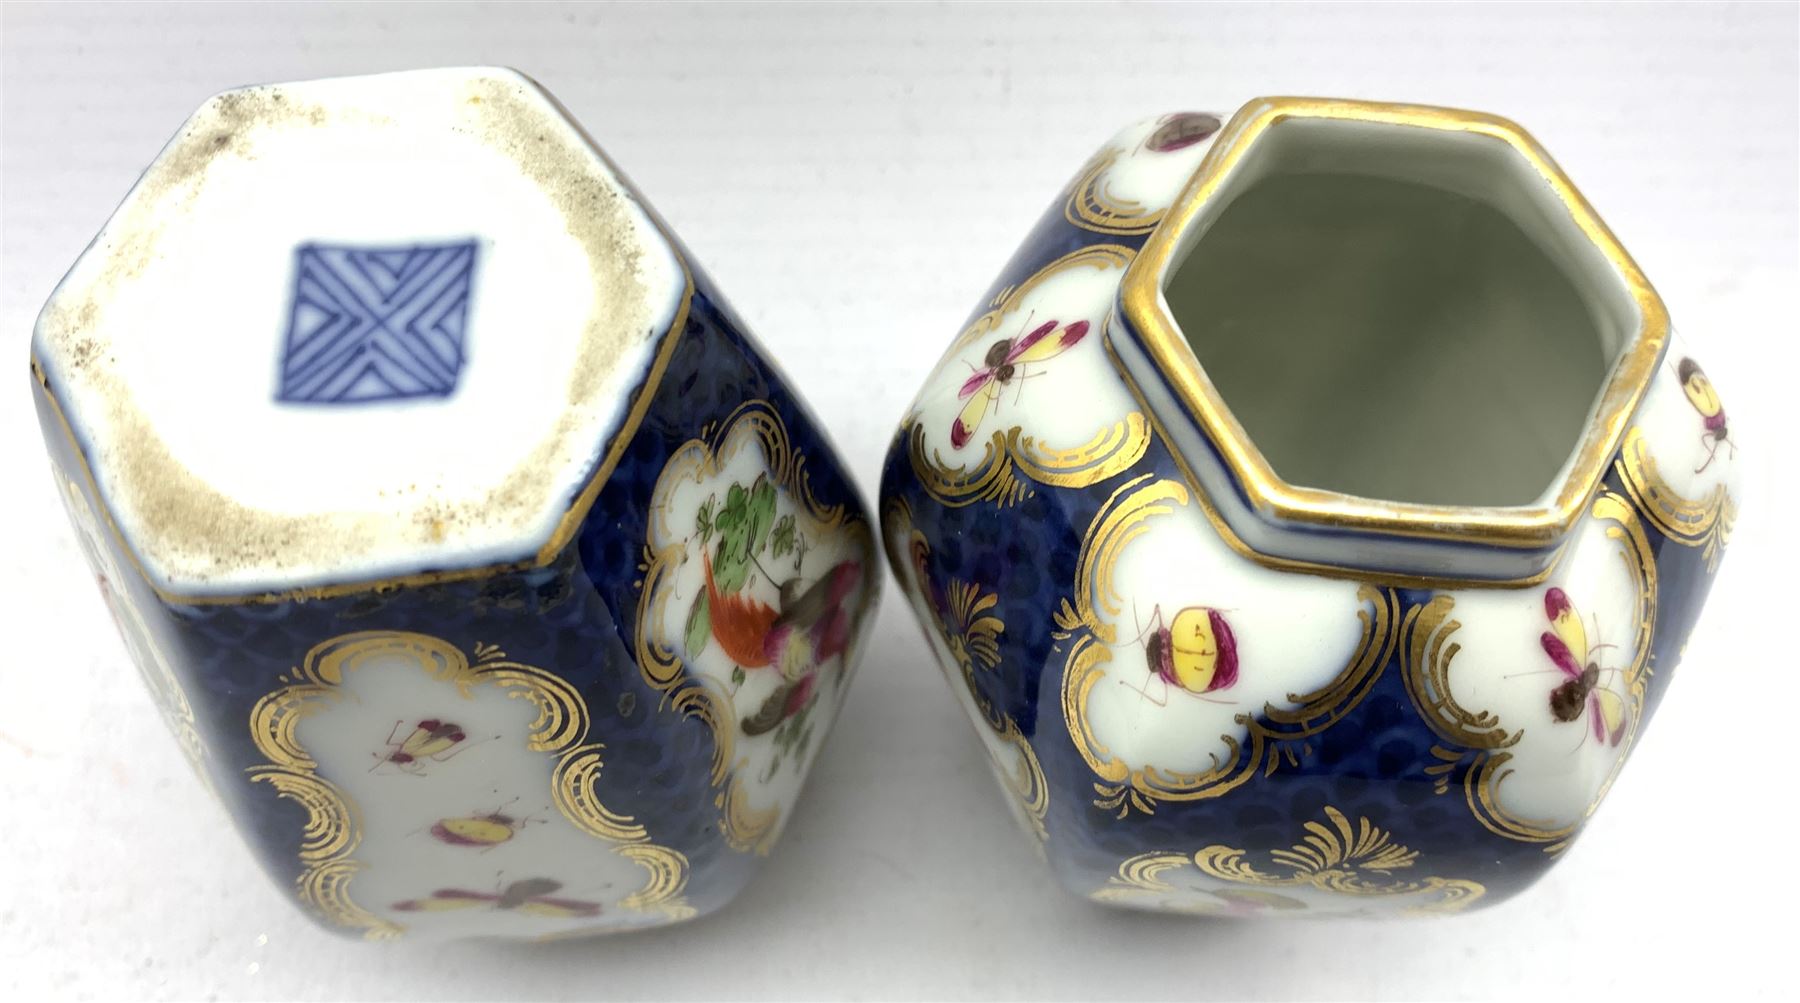 Pair of Paris porcelain hexagonal vases - Image 2 of 2